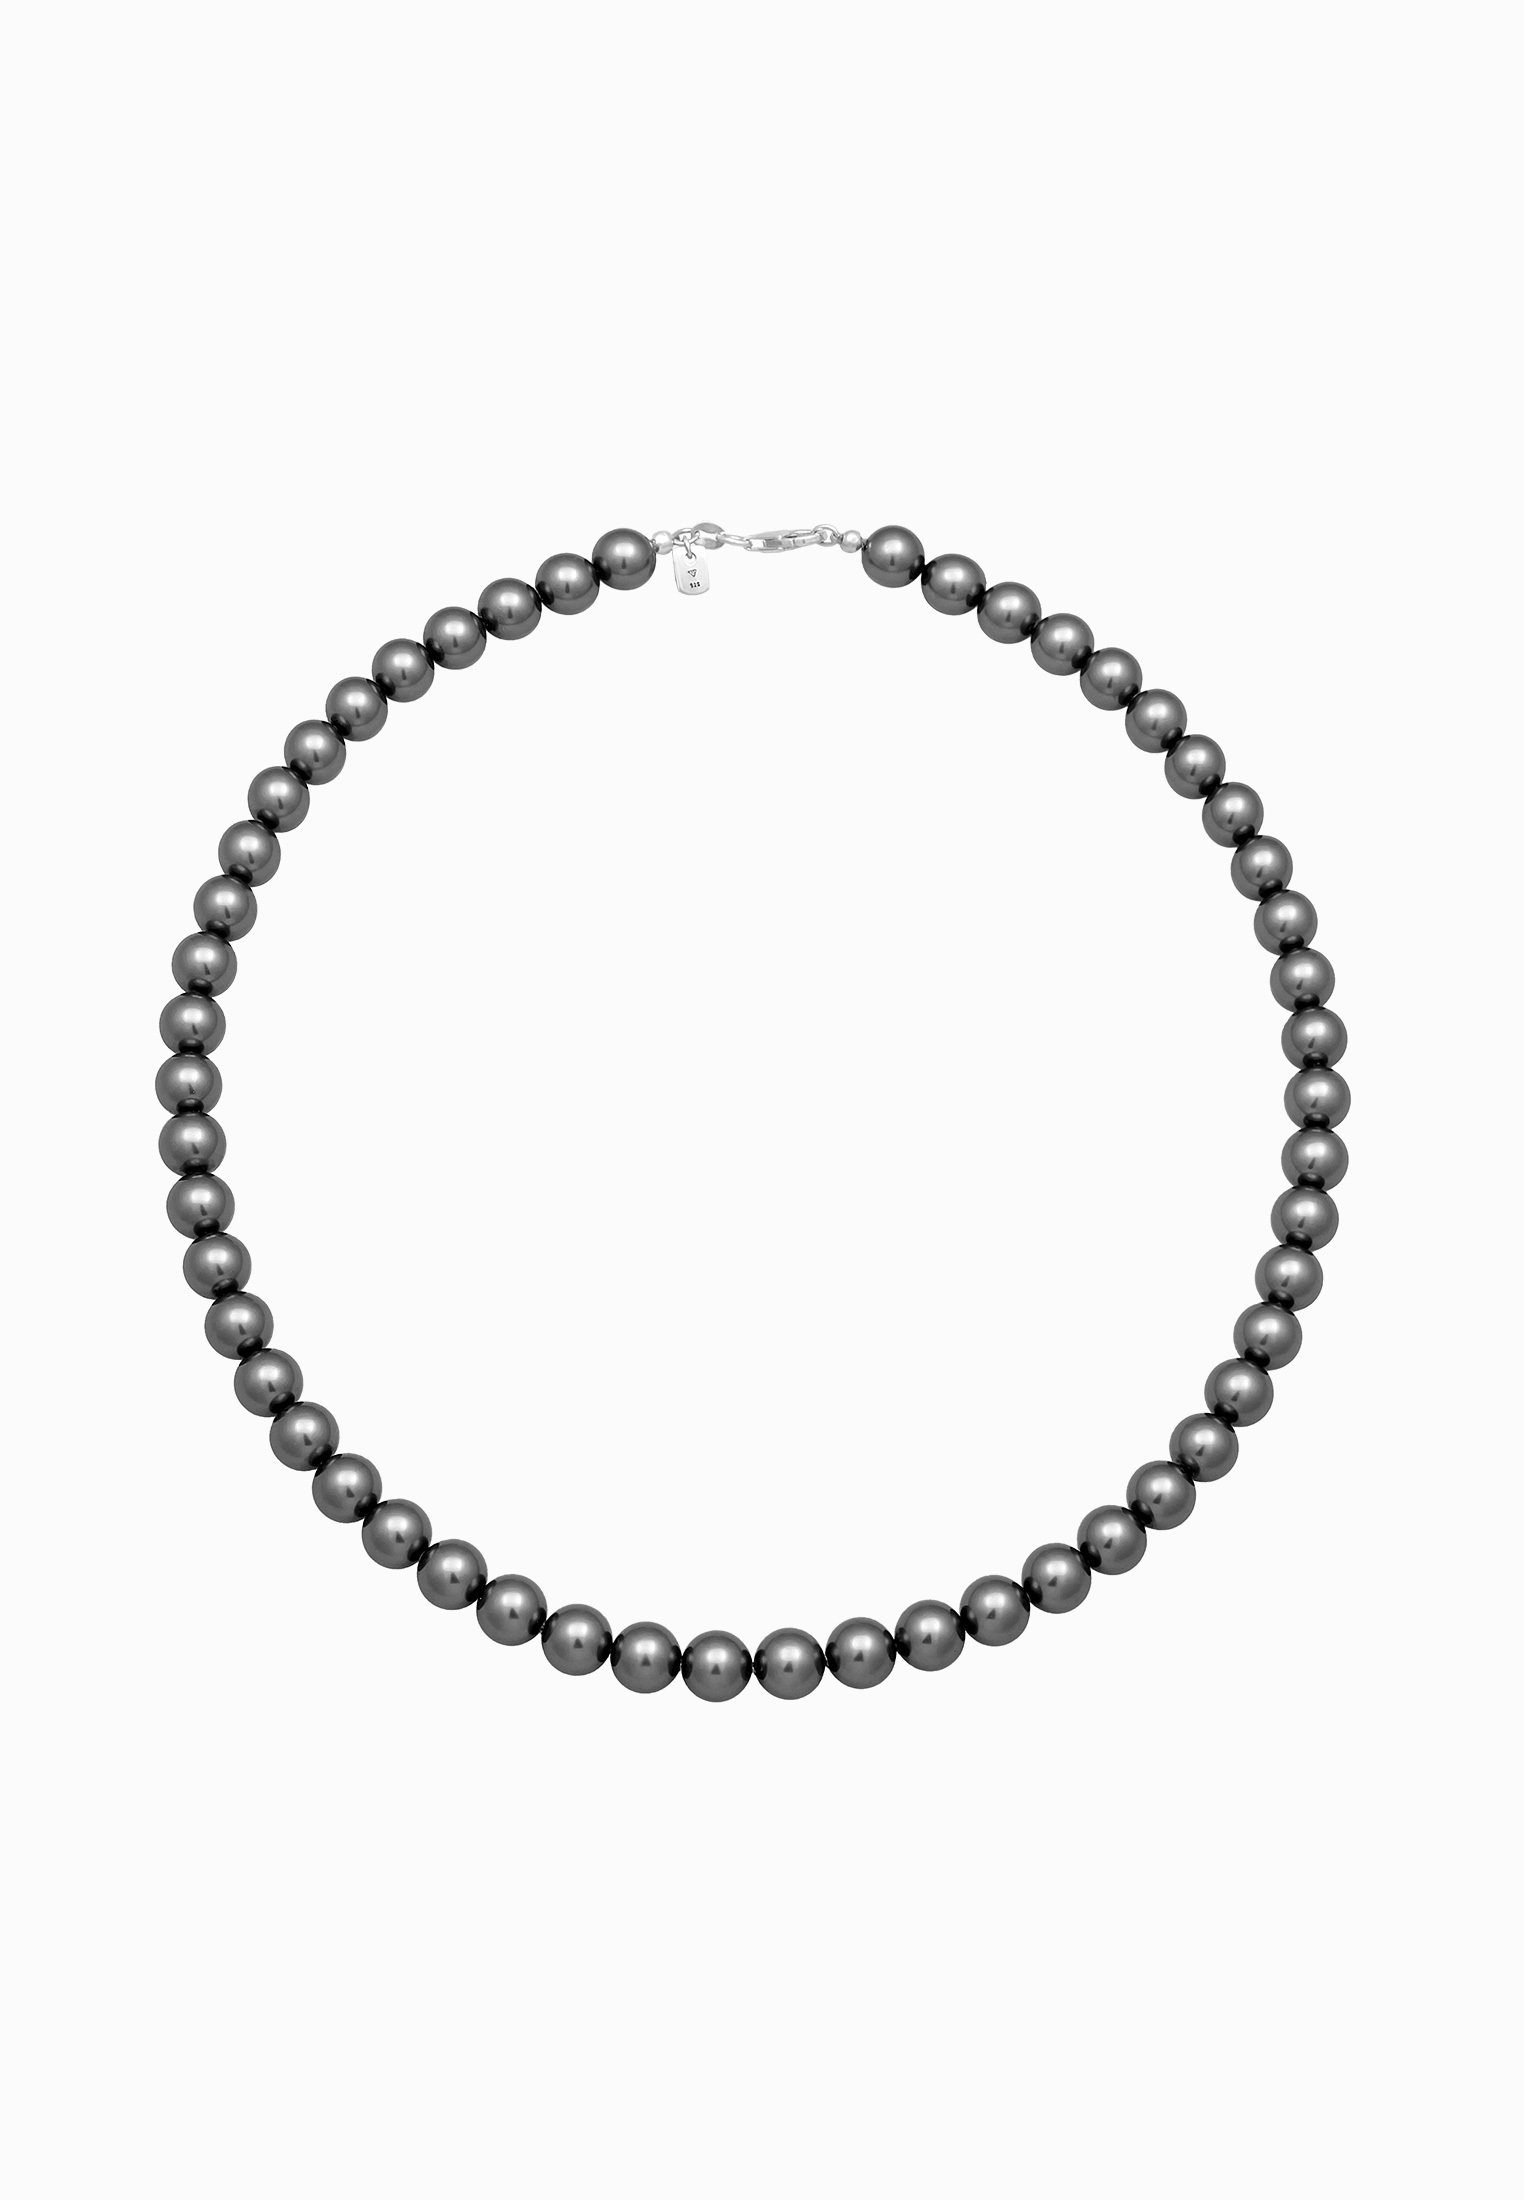 Kuzzoi 925 Silberkette synthetische Herren Perlen Silber Perlenkette